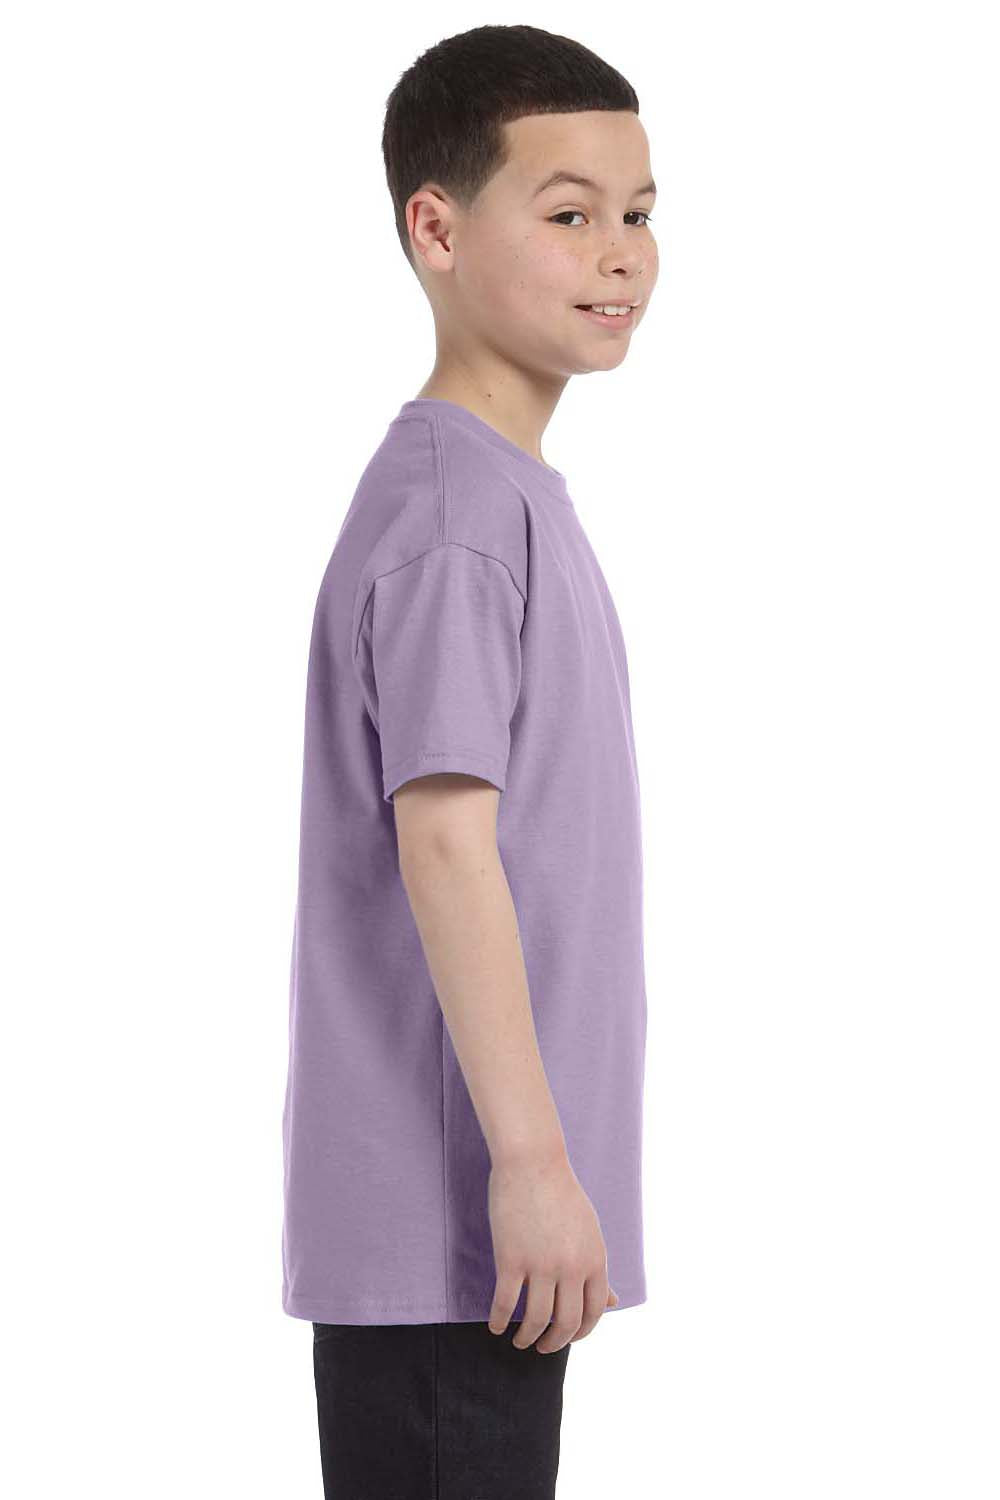 Hanes 54500 Youth ComfortSoft Short Sleeve Crewneck T-Shirt Lavender Purple Side